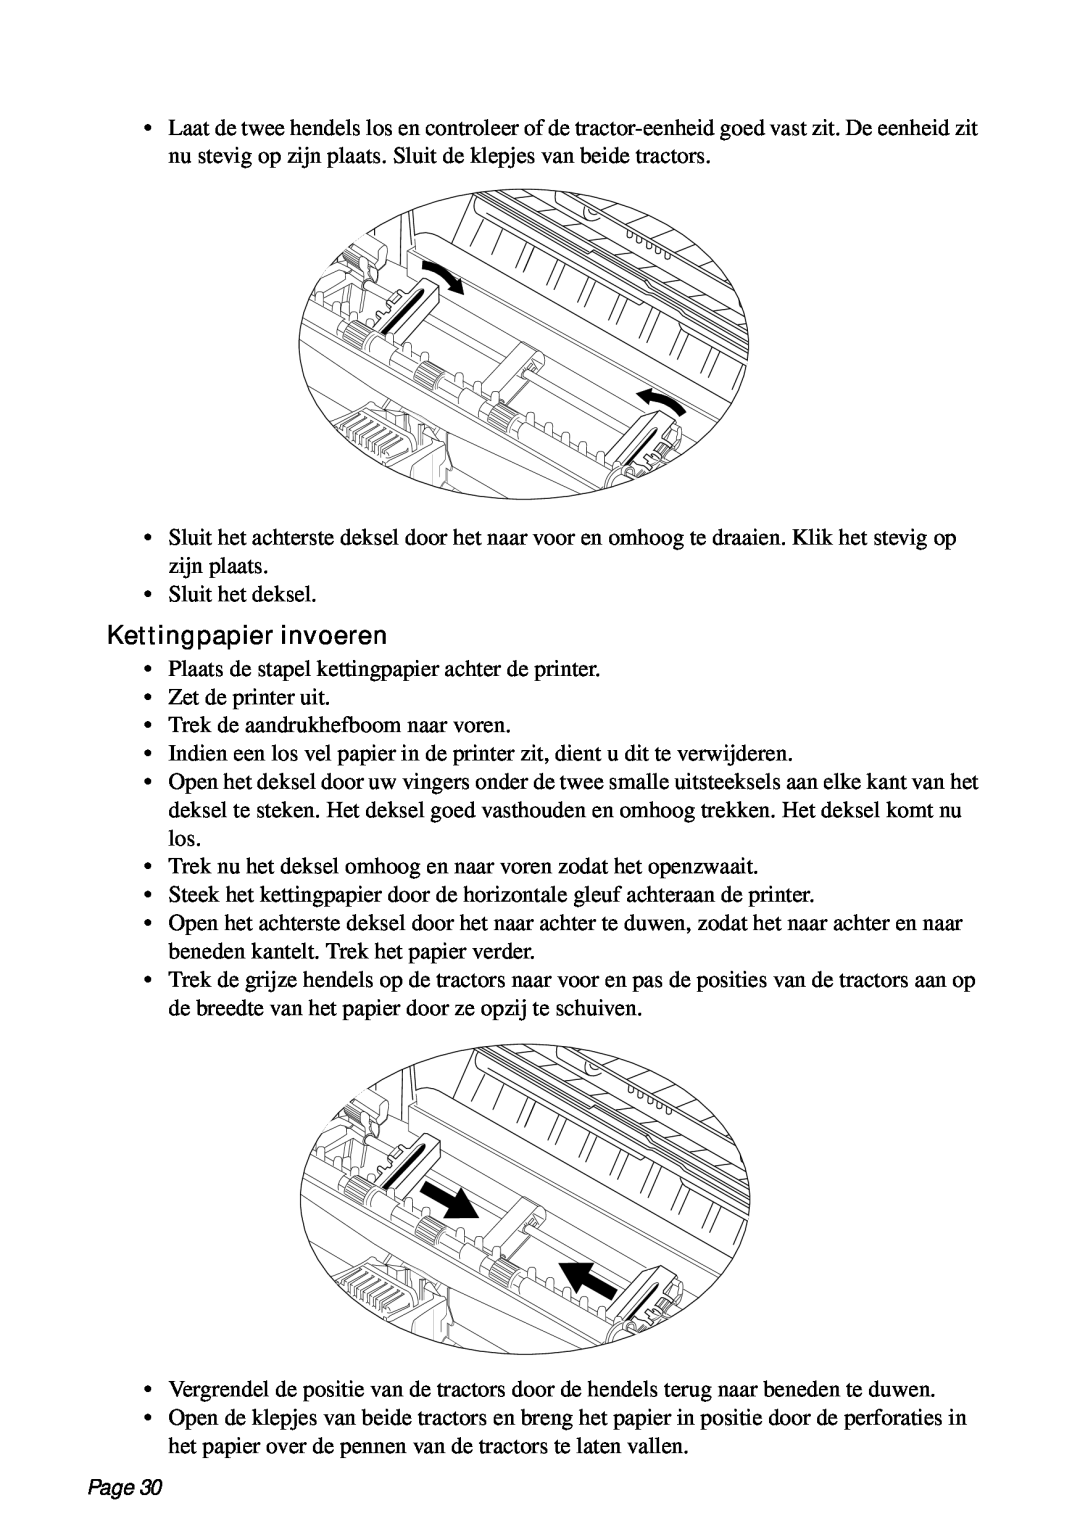 Star Micronics PT-10Q user manual Kettingpapier invoeren, Page 